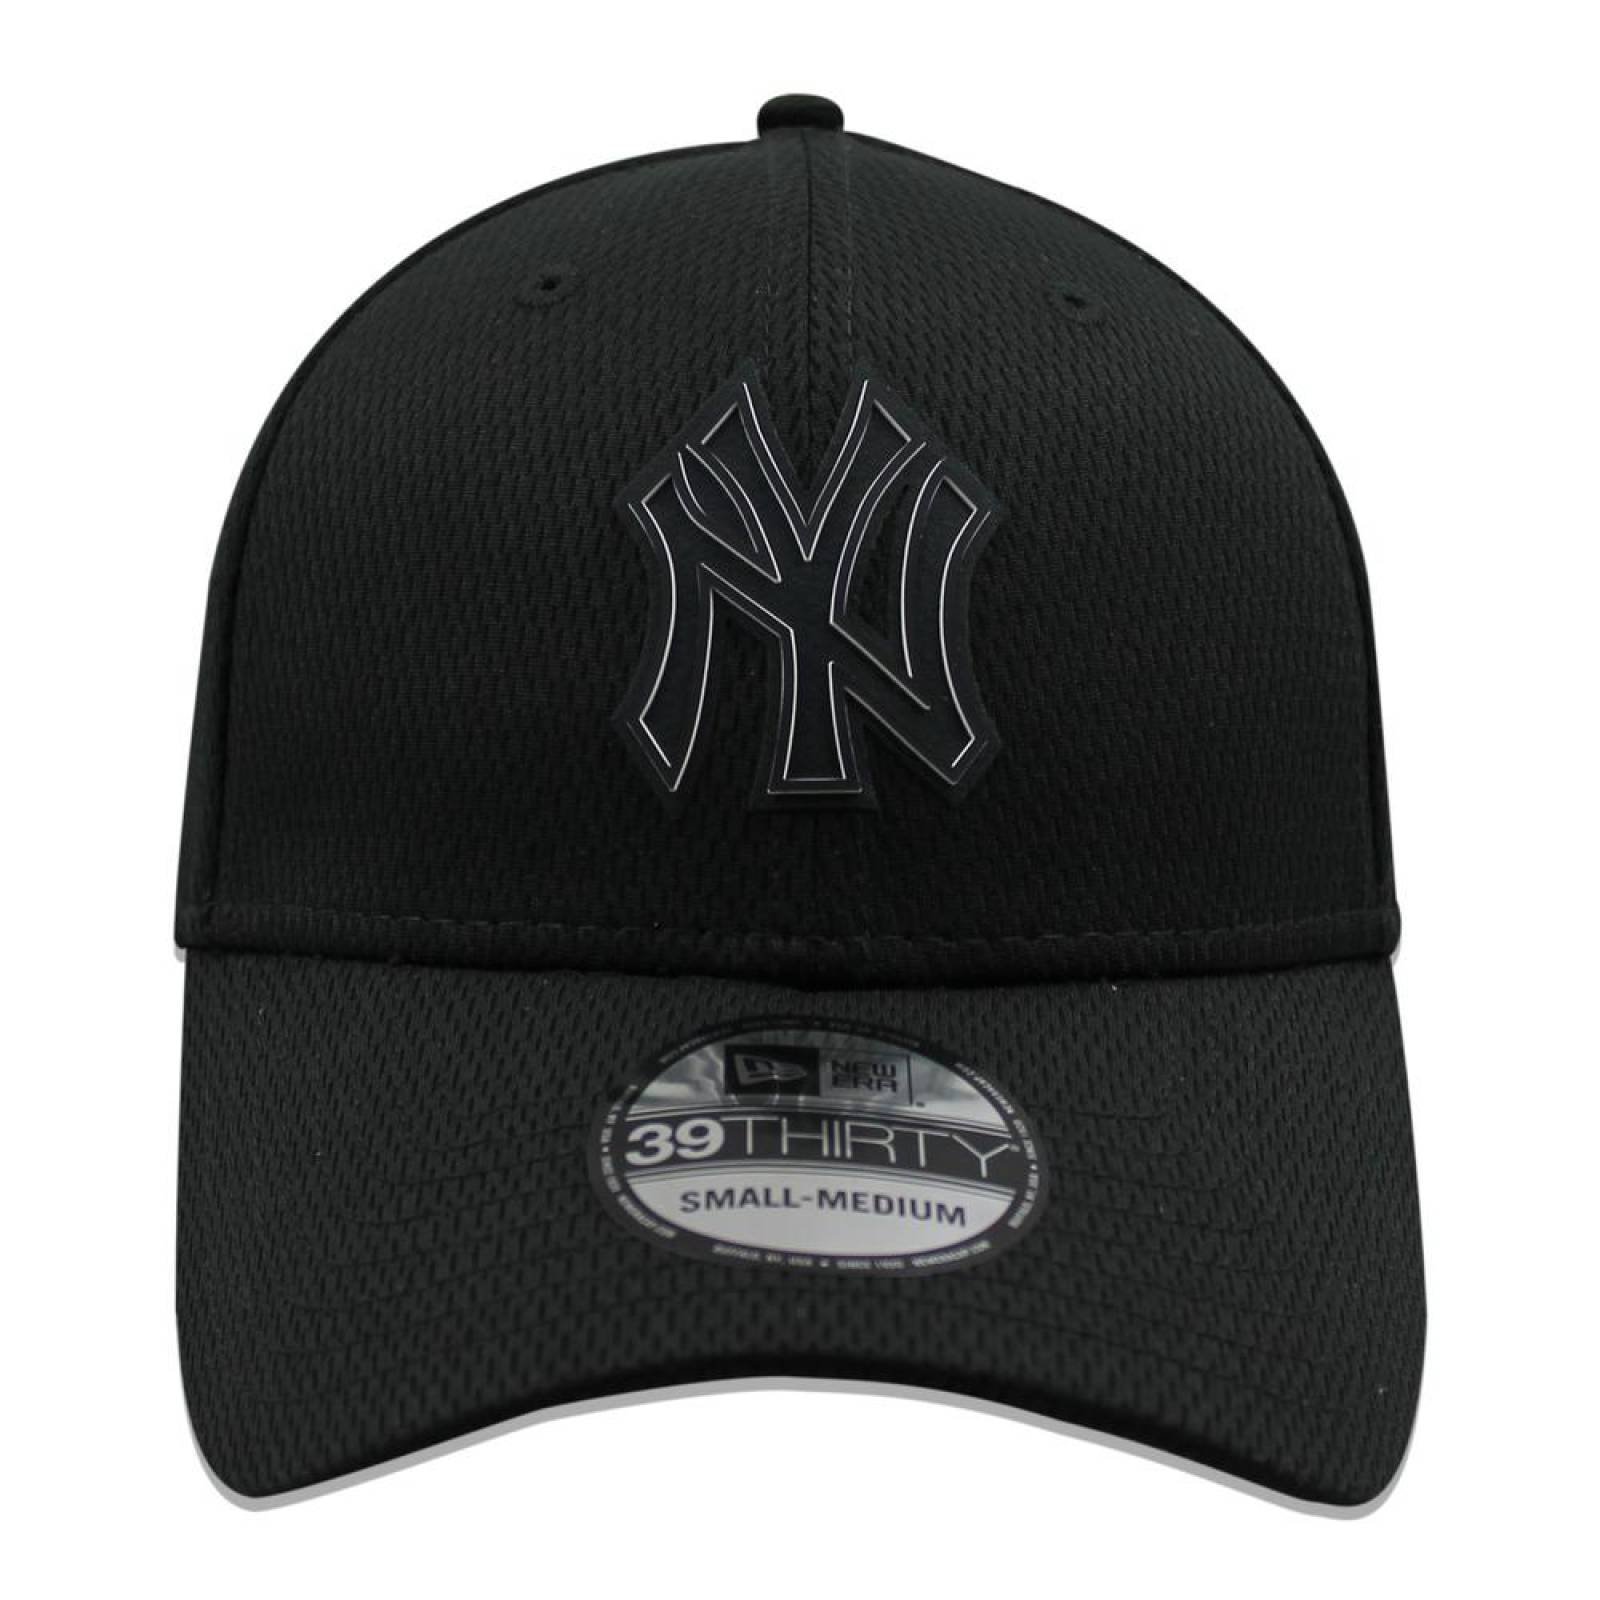 Gorra New Era 39 Thirty MLB Yankees Club House 2019 Negro 